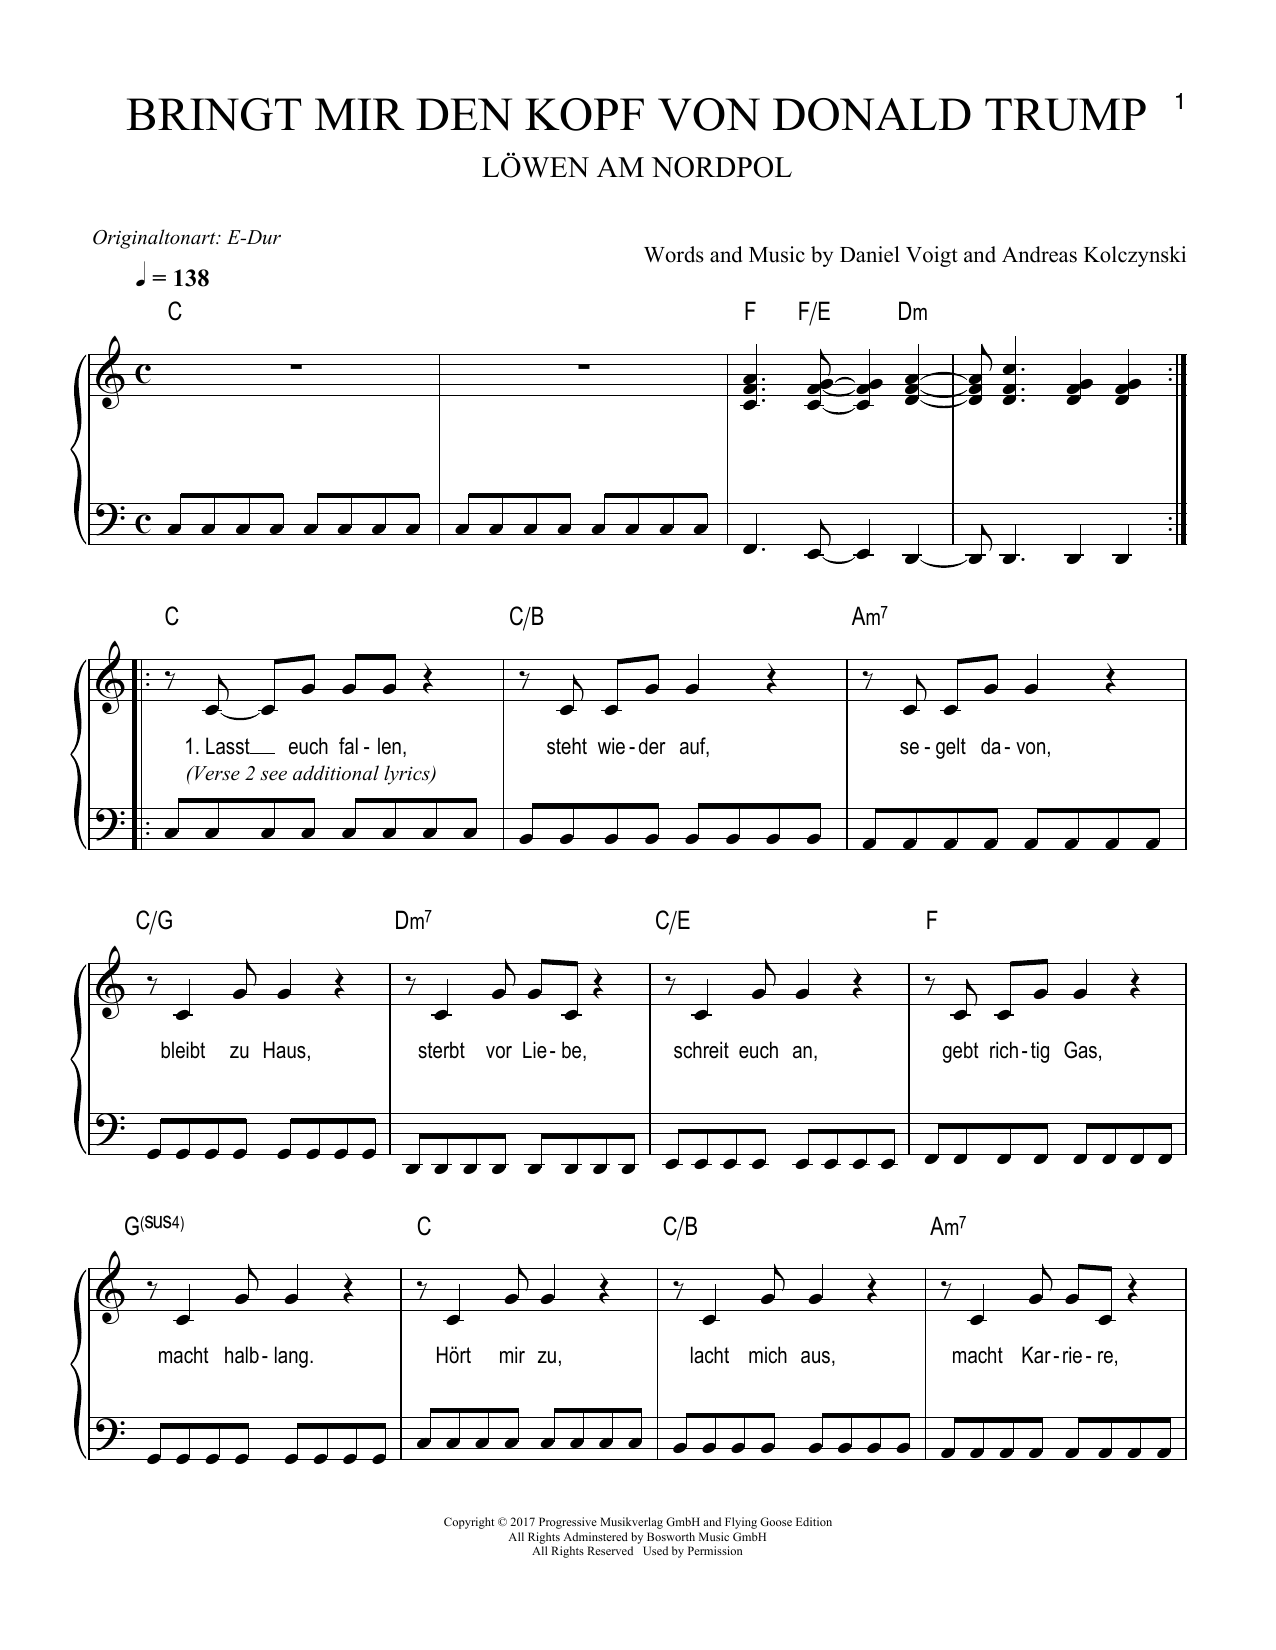 Download Löwen am Nordpol Bringt mir den Kopf von Donald Trump Sheet Music and learn how to play Easy Piano PDF digital score in minutes